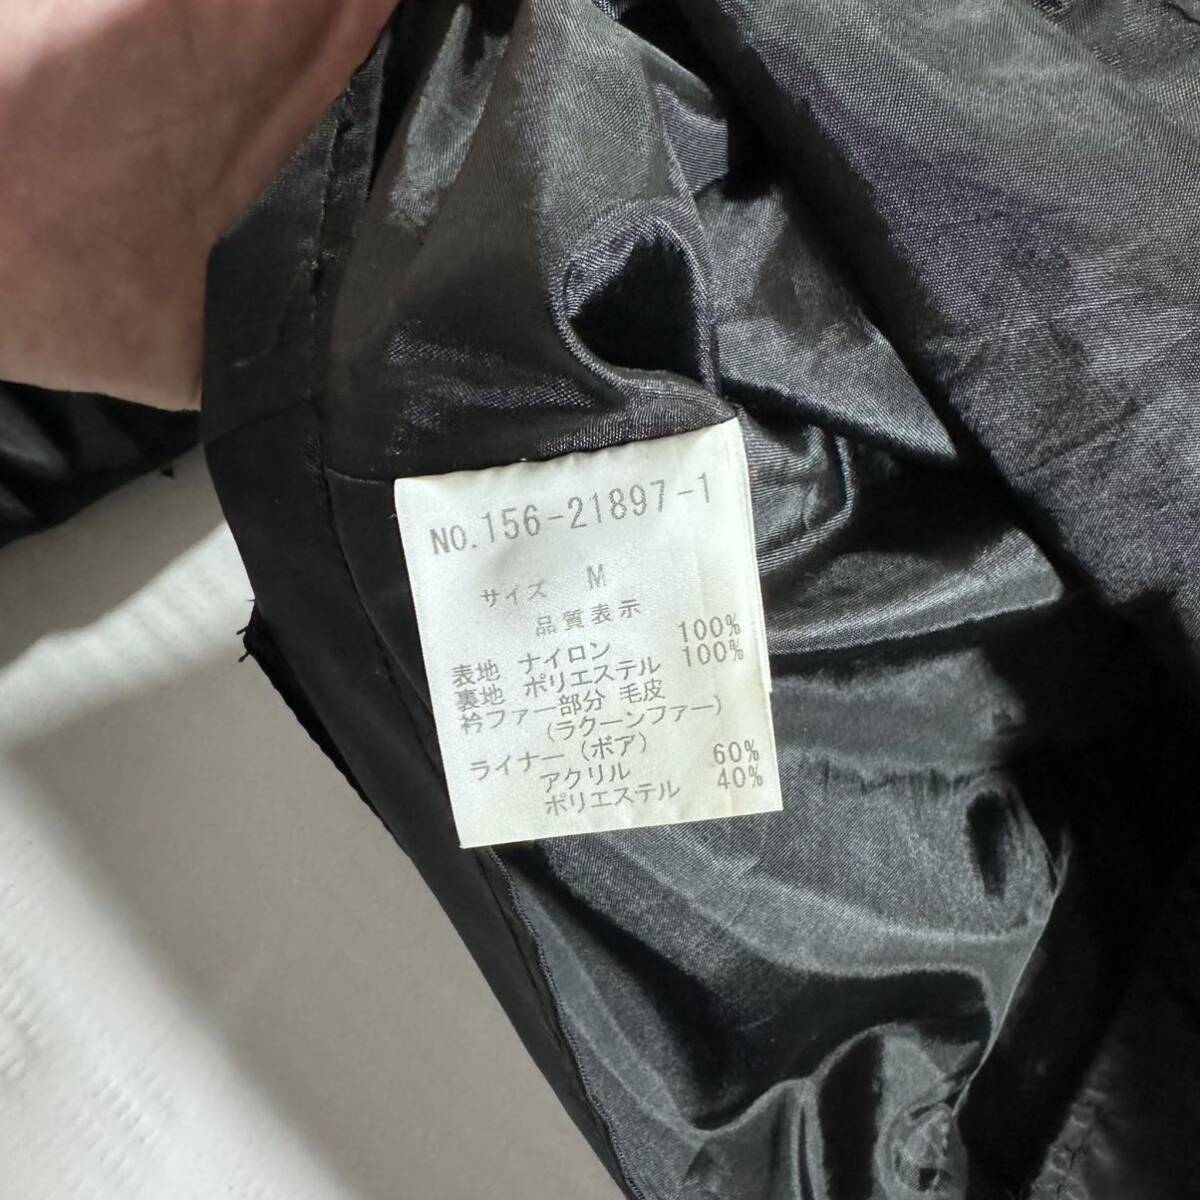 Rare Japanese Label Y2K gimmick jacket 14th addiction share spirit ifsixwasnine civarize lgb goa kmrii archive obelisk 00s gunda_画像8